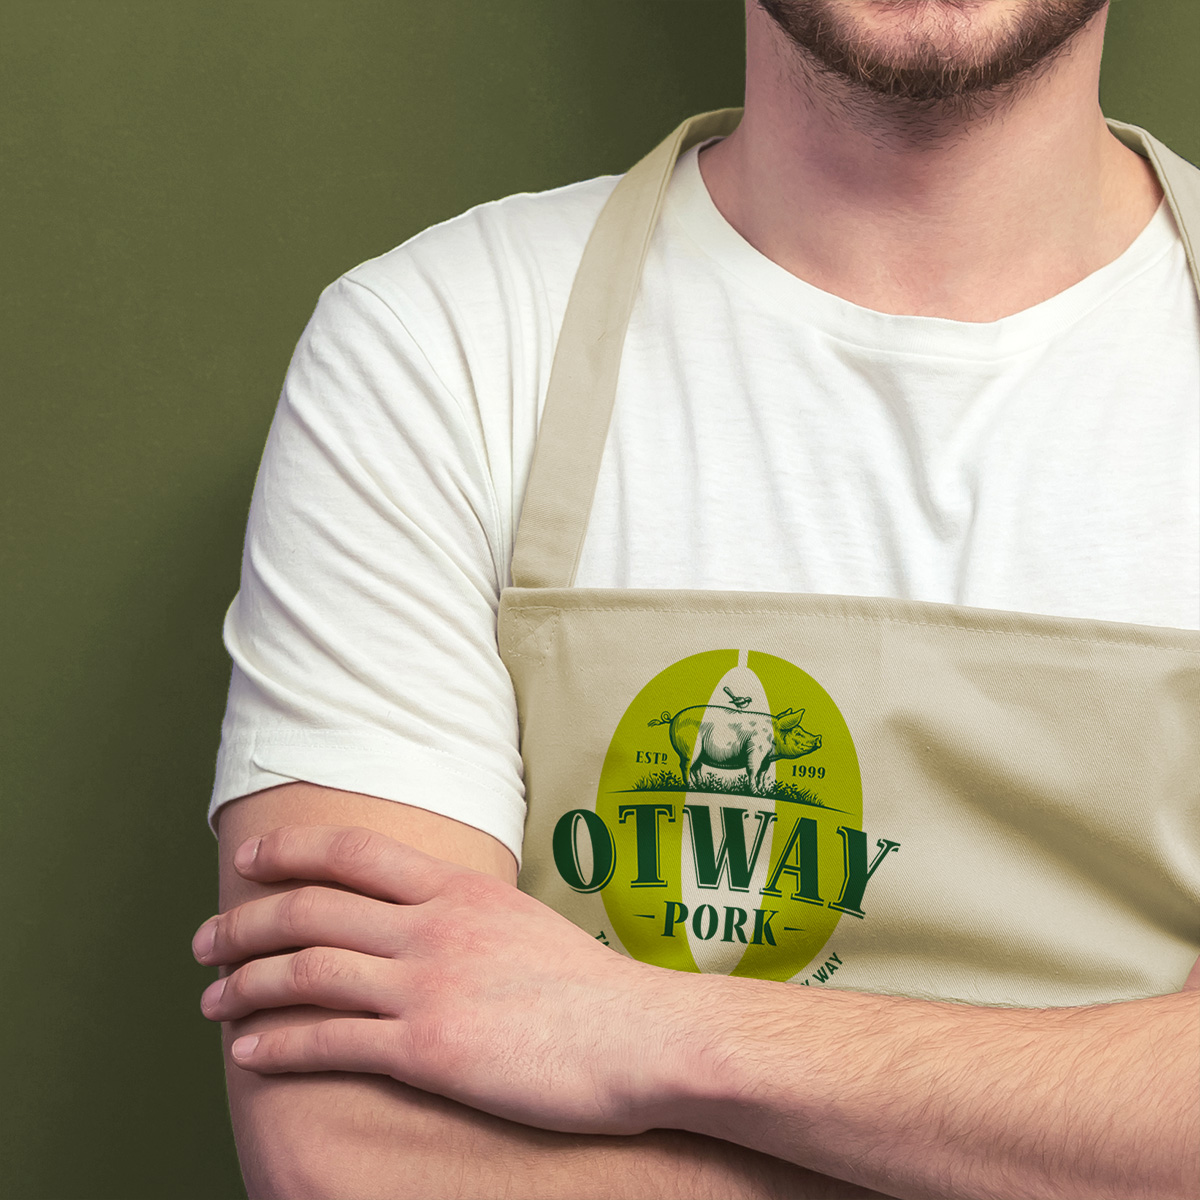 otway-pork-redesign-apron-marketing-meat-flavour